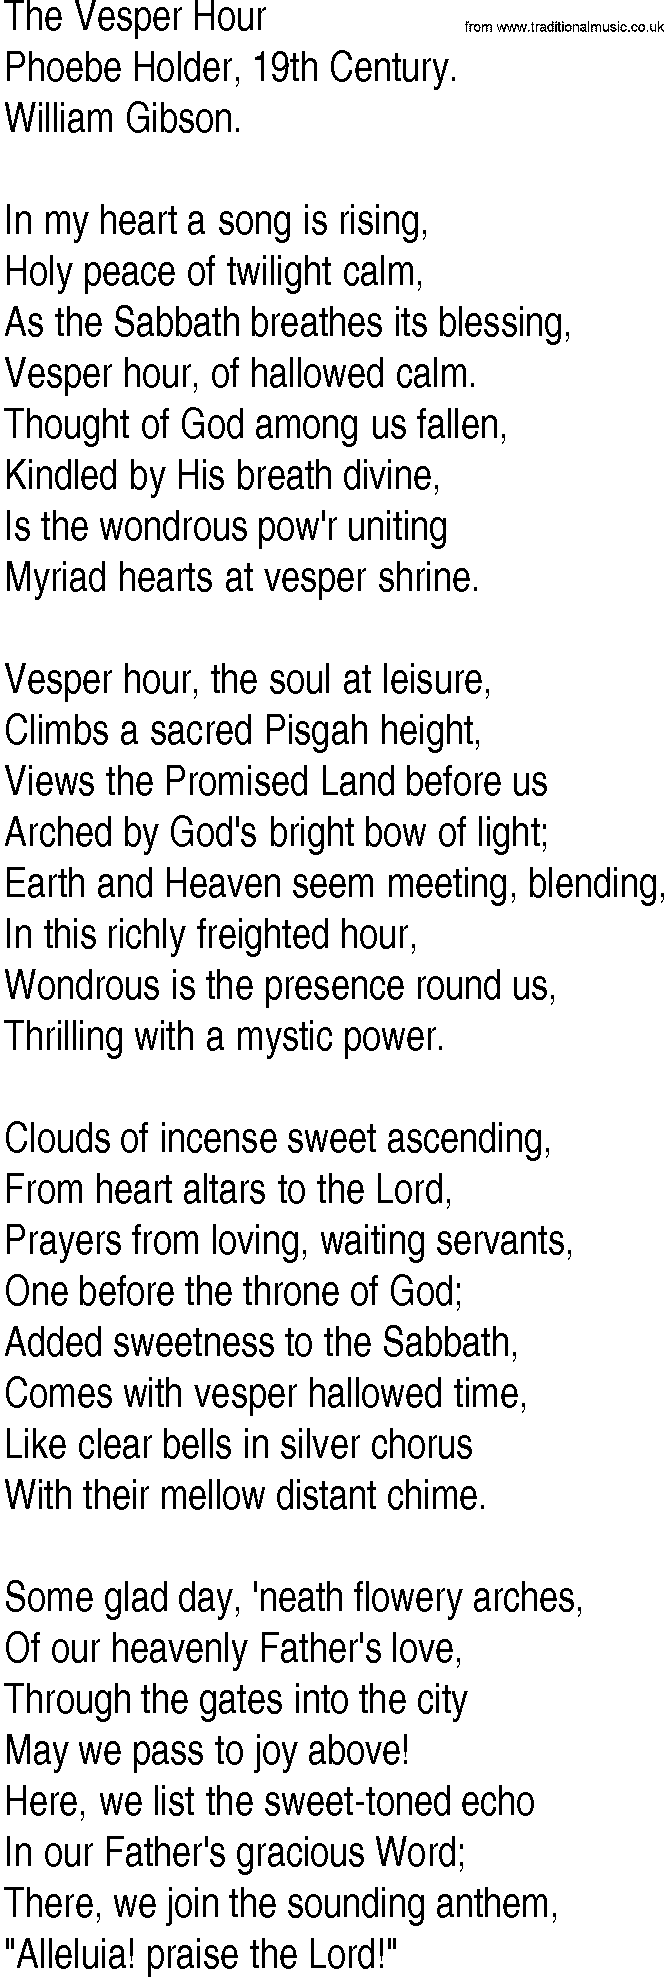 Hymn and Gospel Song: The Vesper Hour by Phoebe Holder th Century lyrics